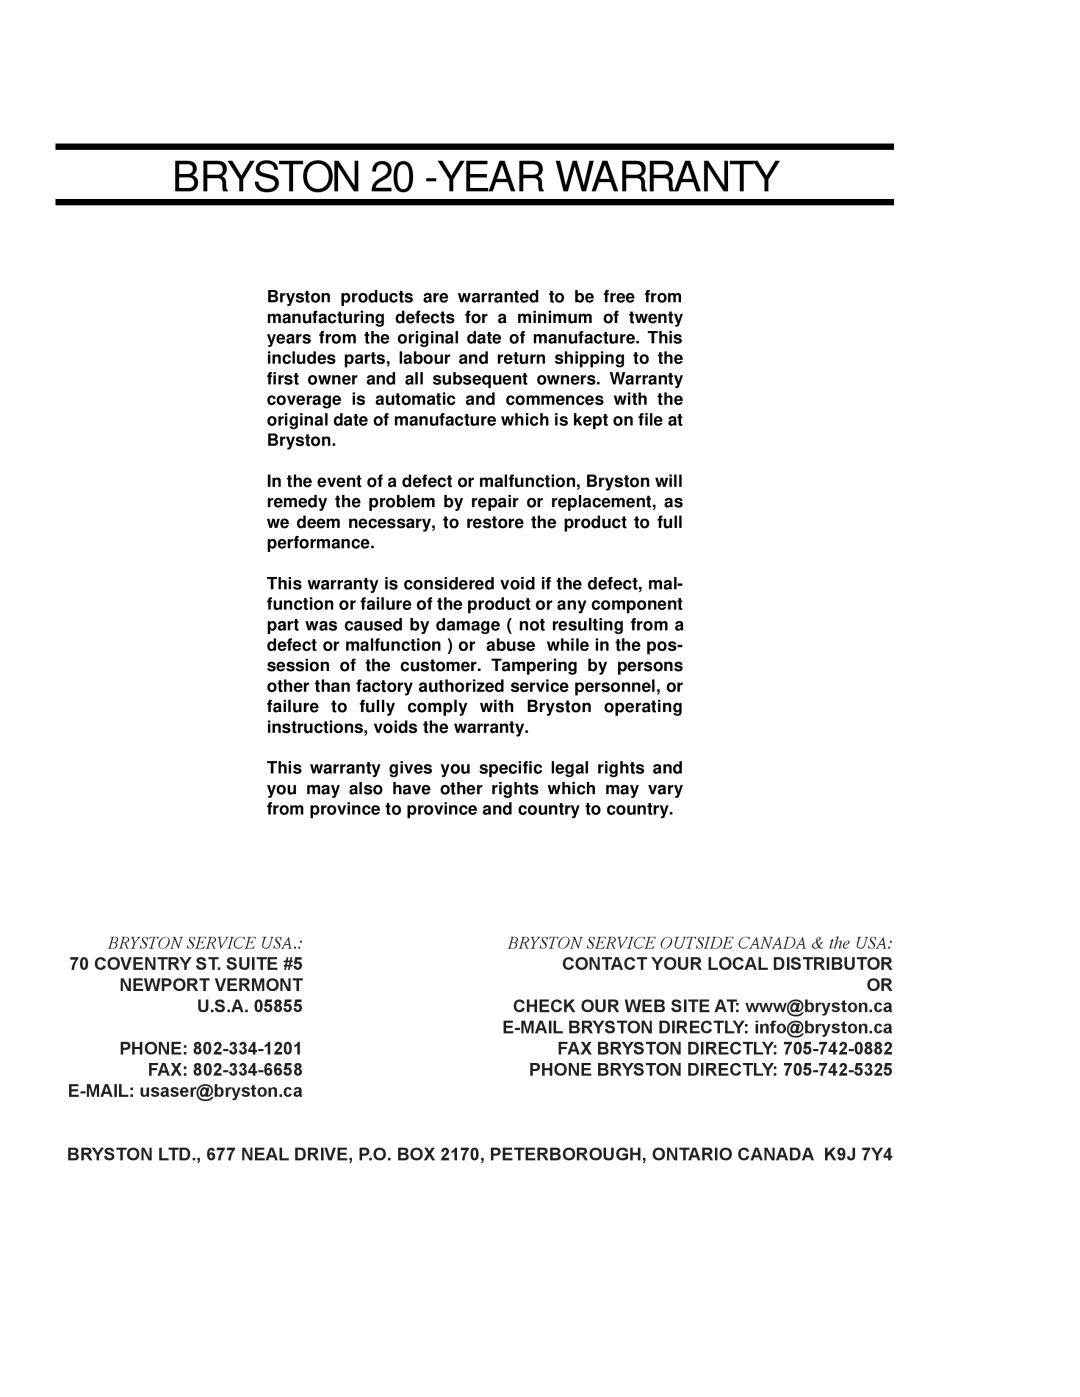 Bryston 2B owner manual BRYSTON 20 -YEARWARRANTY, Bryston Service Usa, BRYSTON SERVICE OUTSIDE CANADA & the USA 